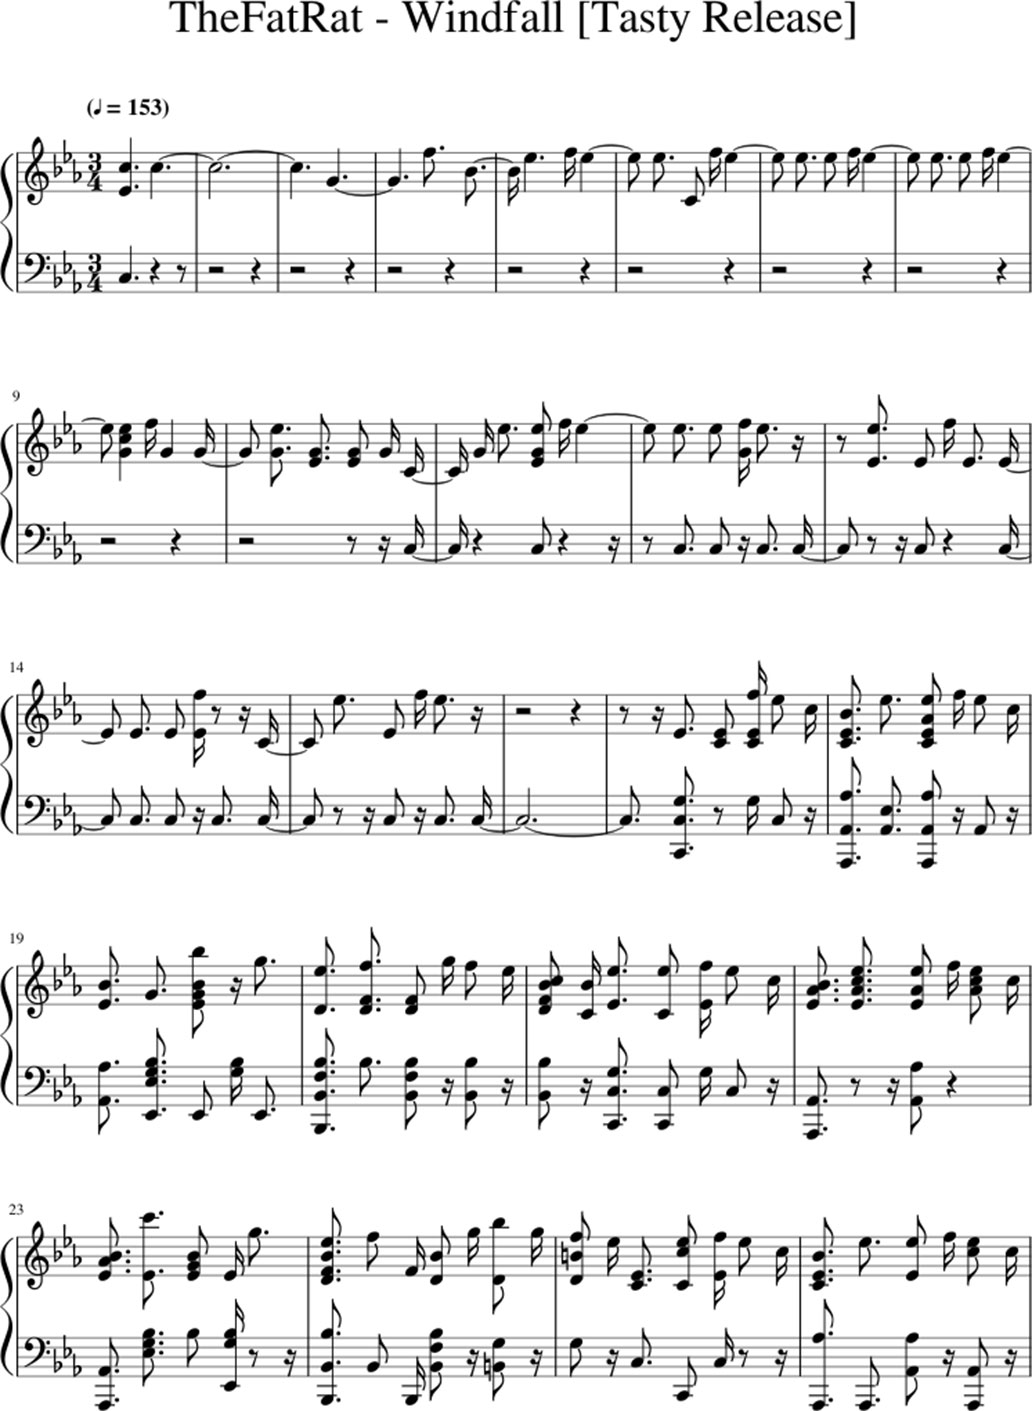 Windfall sheet music notes 1